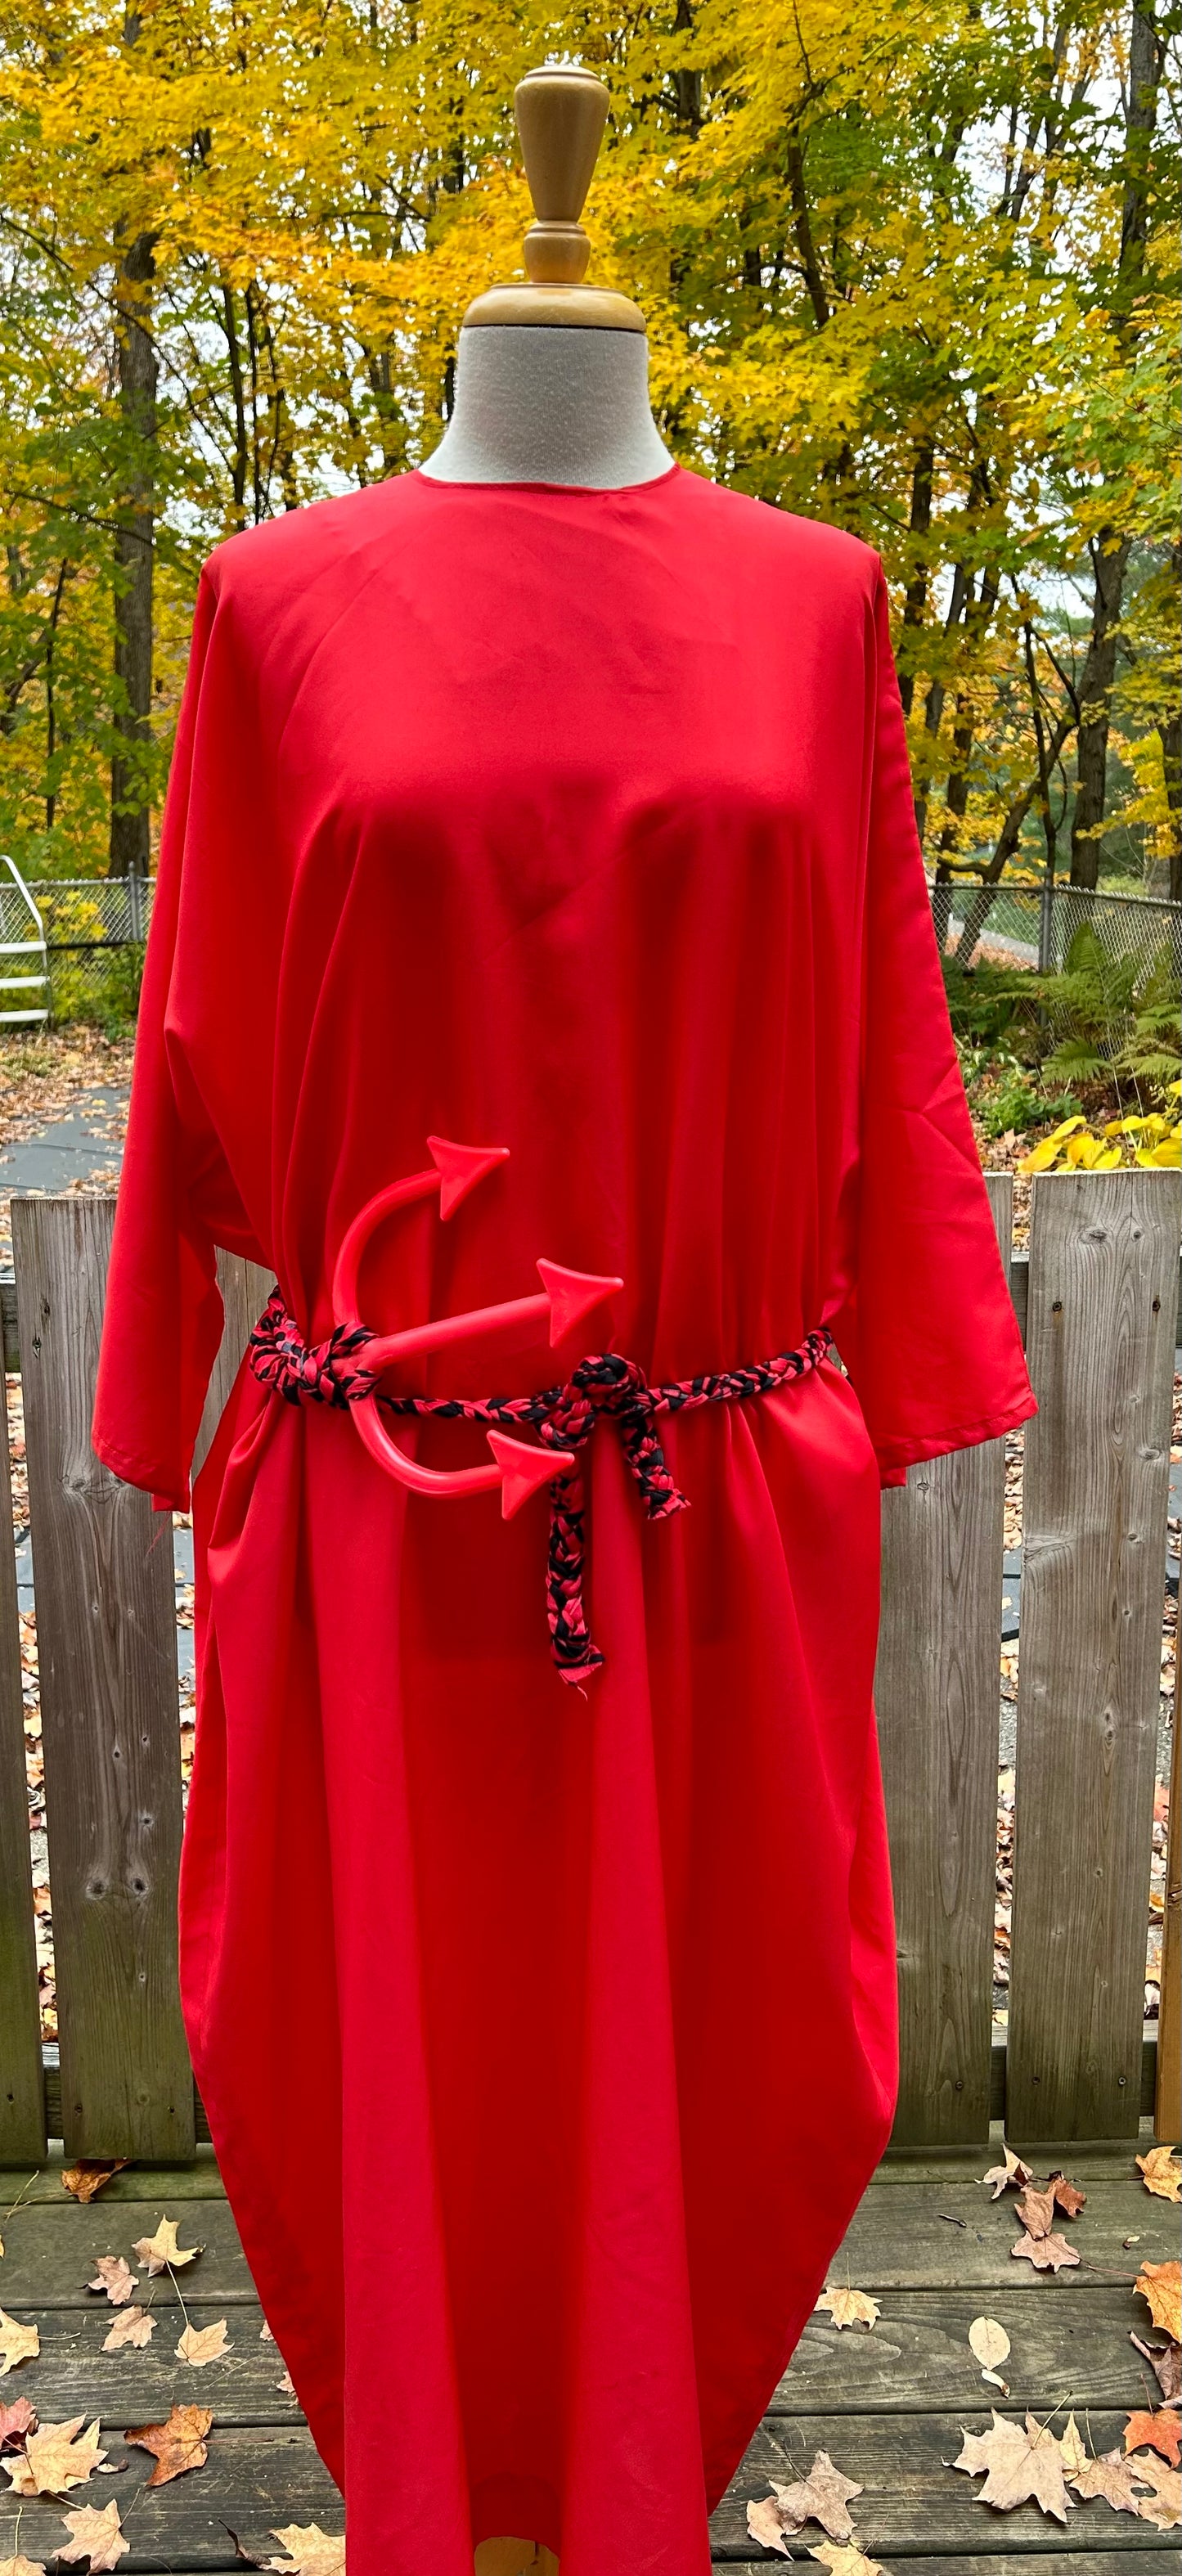 Red Devil Adult Medium Costume Group 112